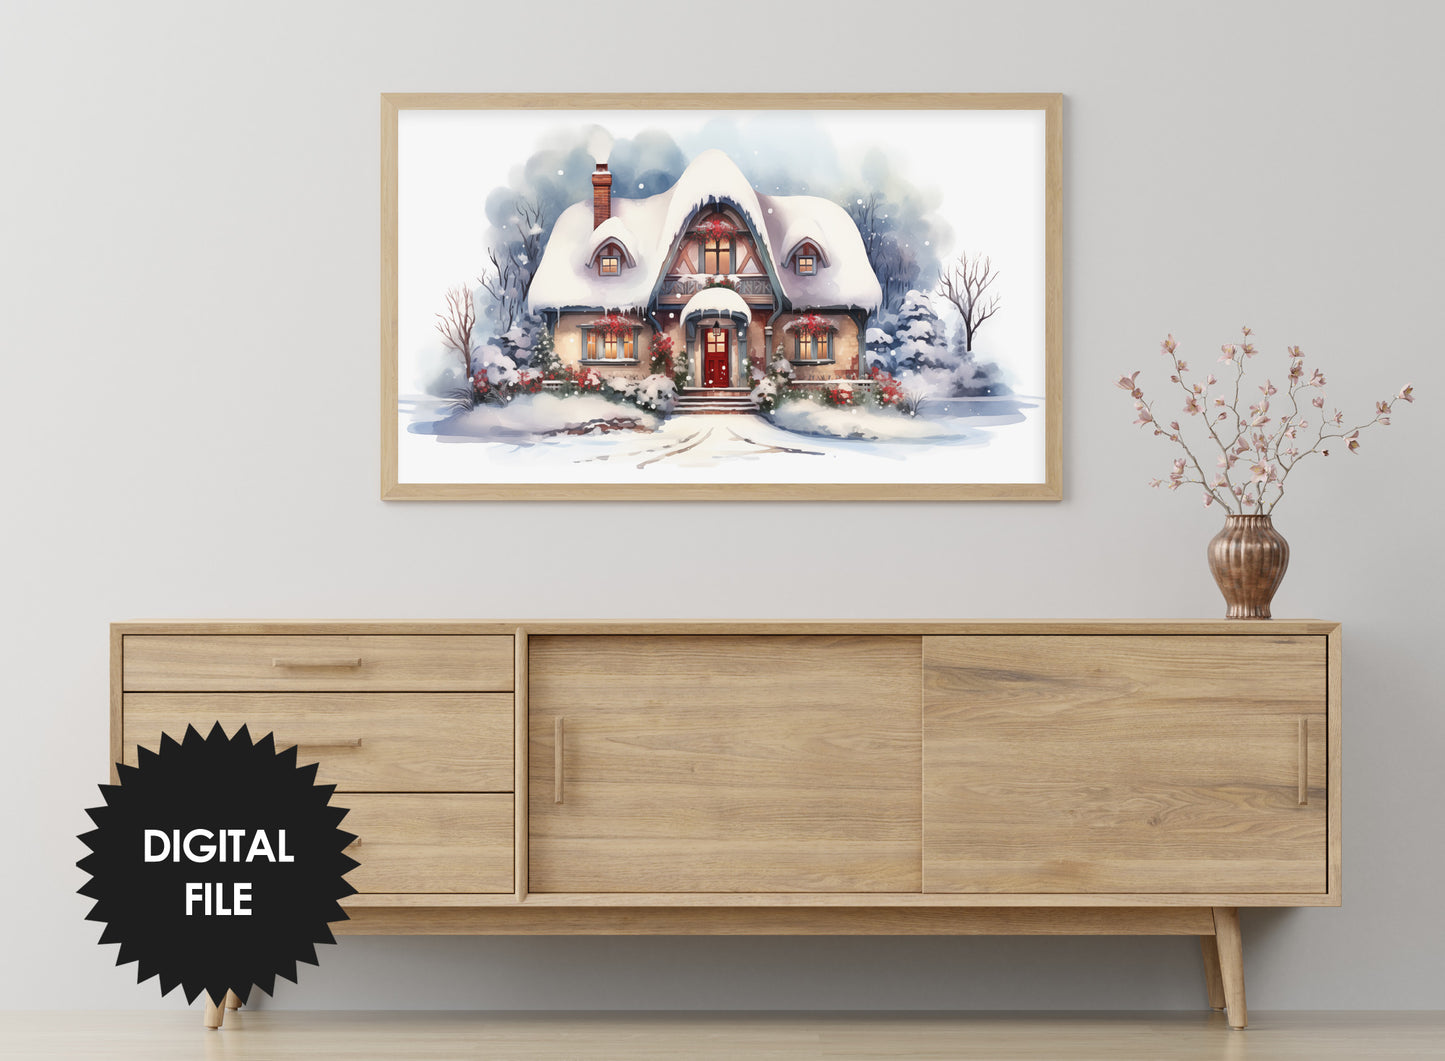 Christmas Frame TV Art | Joyful Winter Cottage | Digital TV Art | Digital Watercolor Painting | Instant Download JPEG